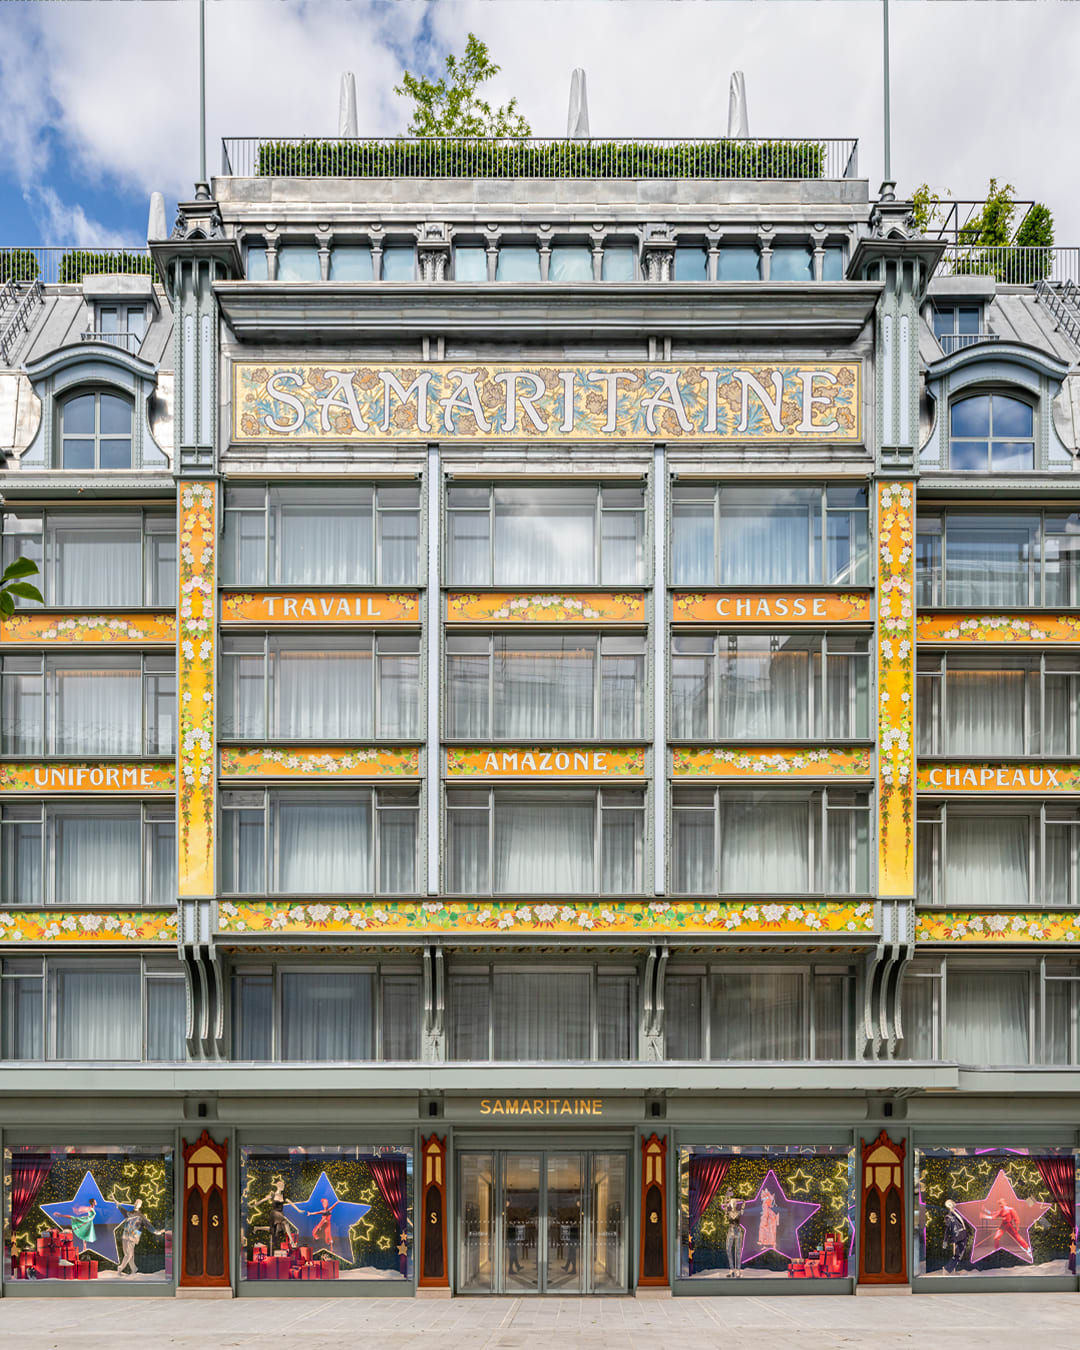 Travel with Terry: PARIS: La Samaritaine Department Store